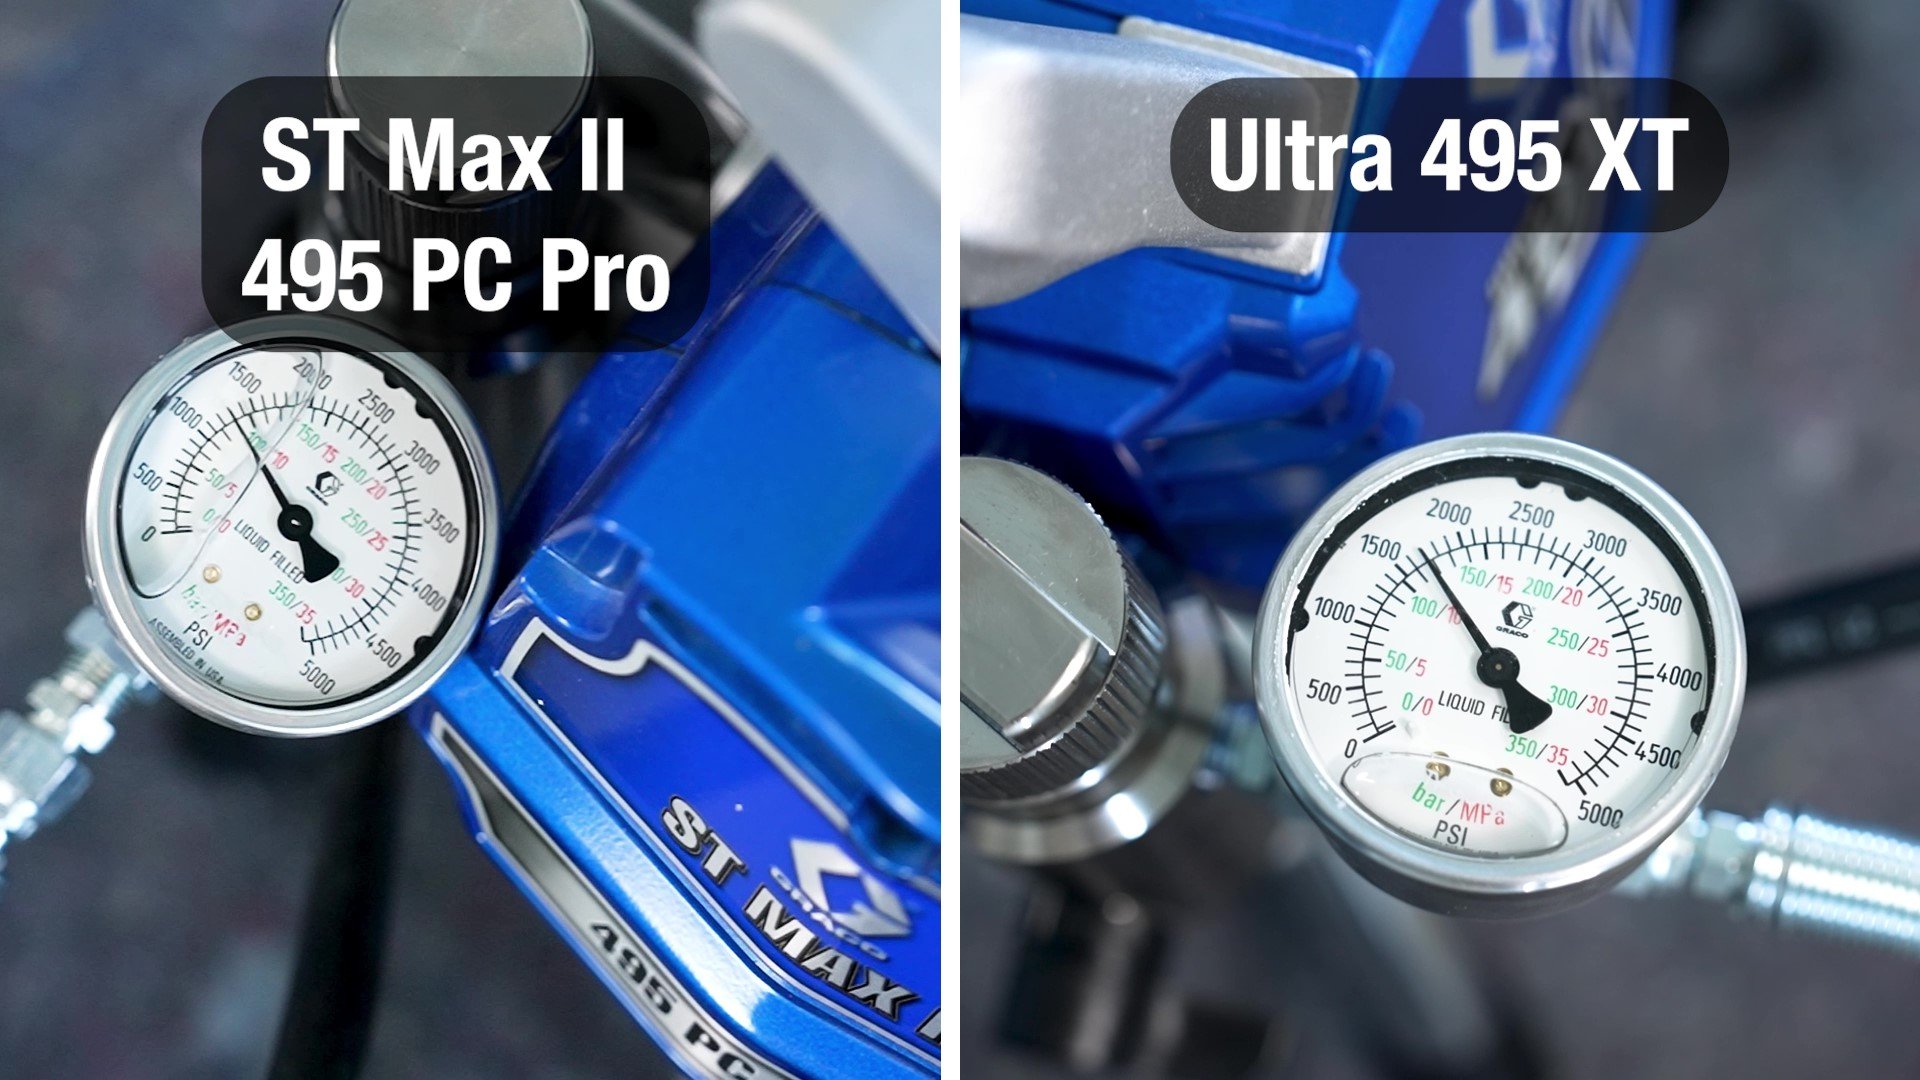 Vergleich Druckabfall Graco ST MAx II 495 PC Pro zur Graco Ultra 495 XT